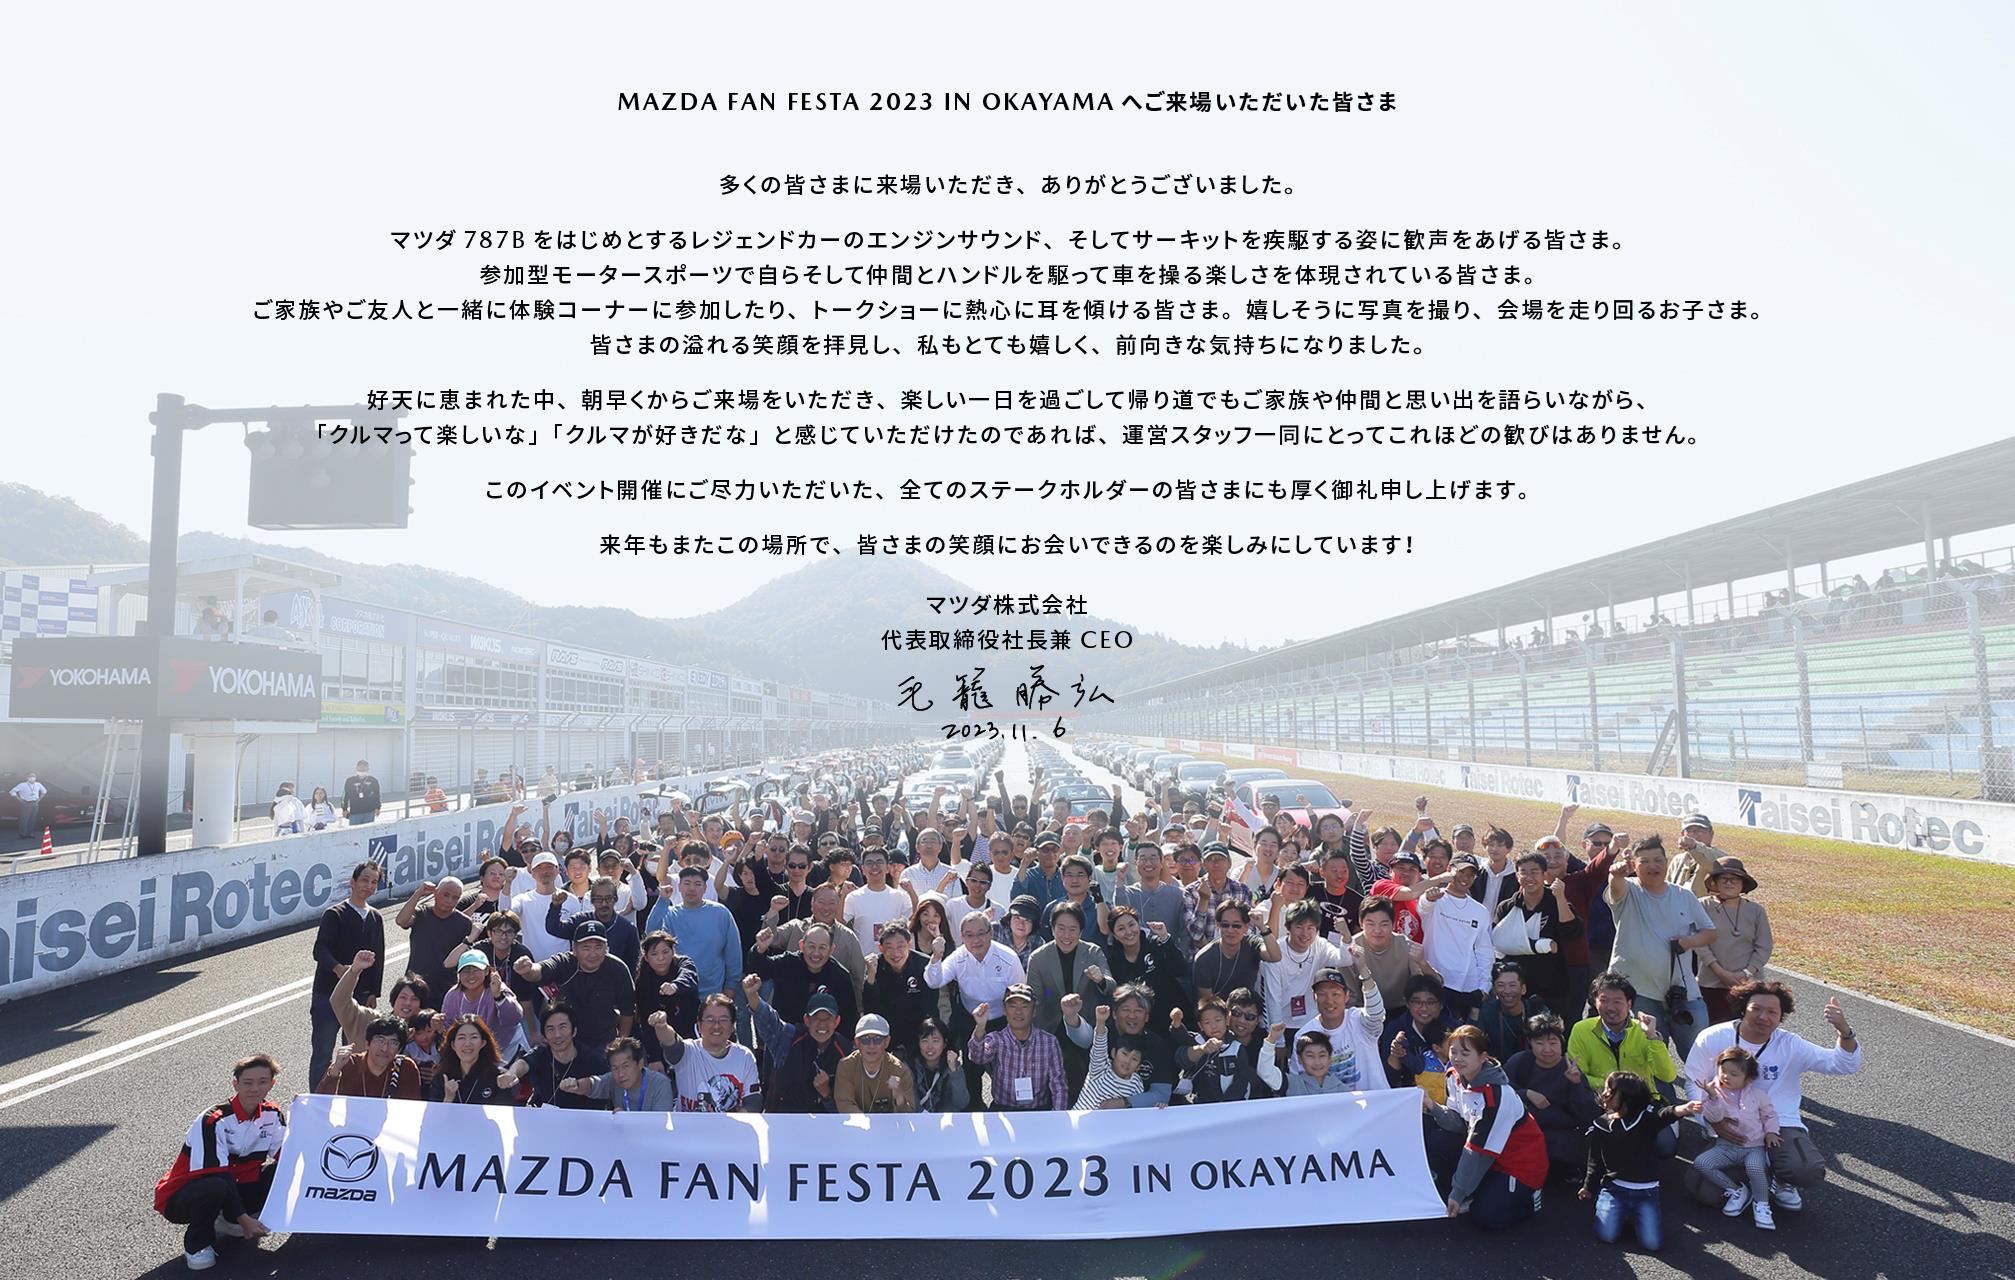 MAZDA FAN FESTA 2023 IN OKAYAMA へご来場いただいた皆さま